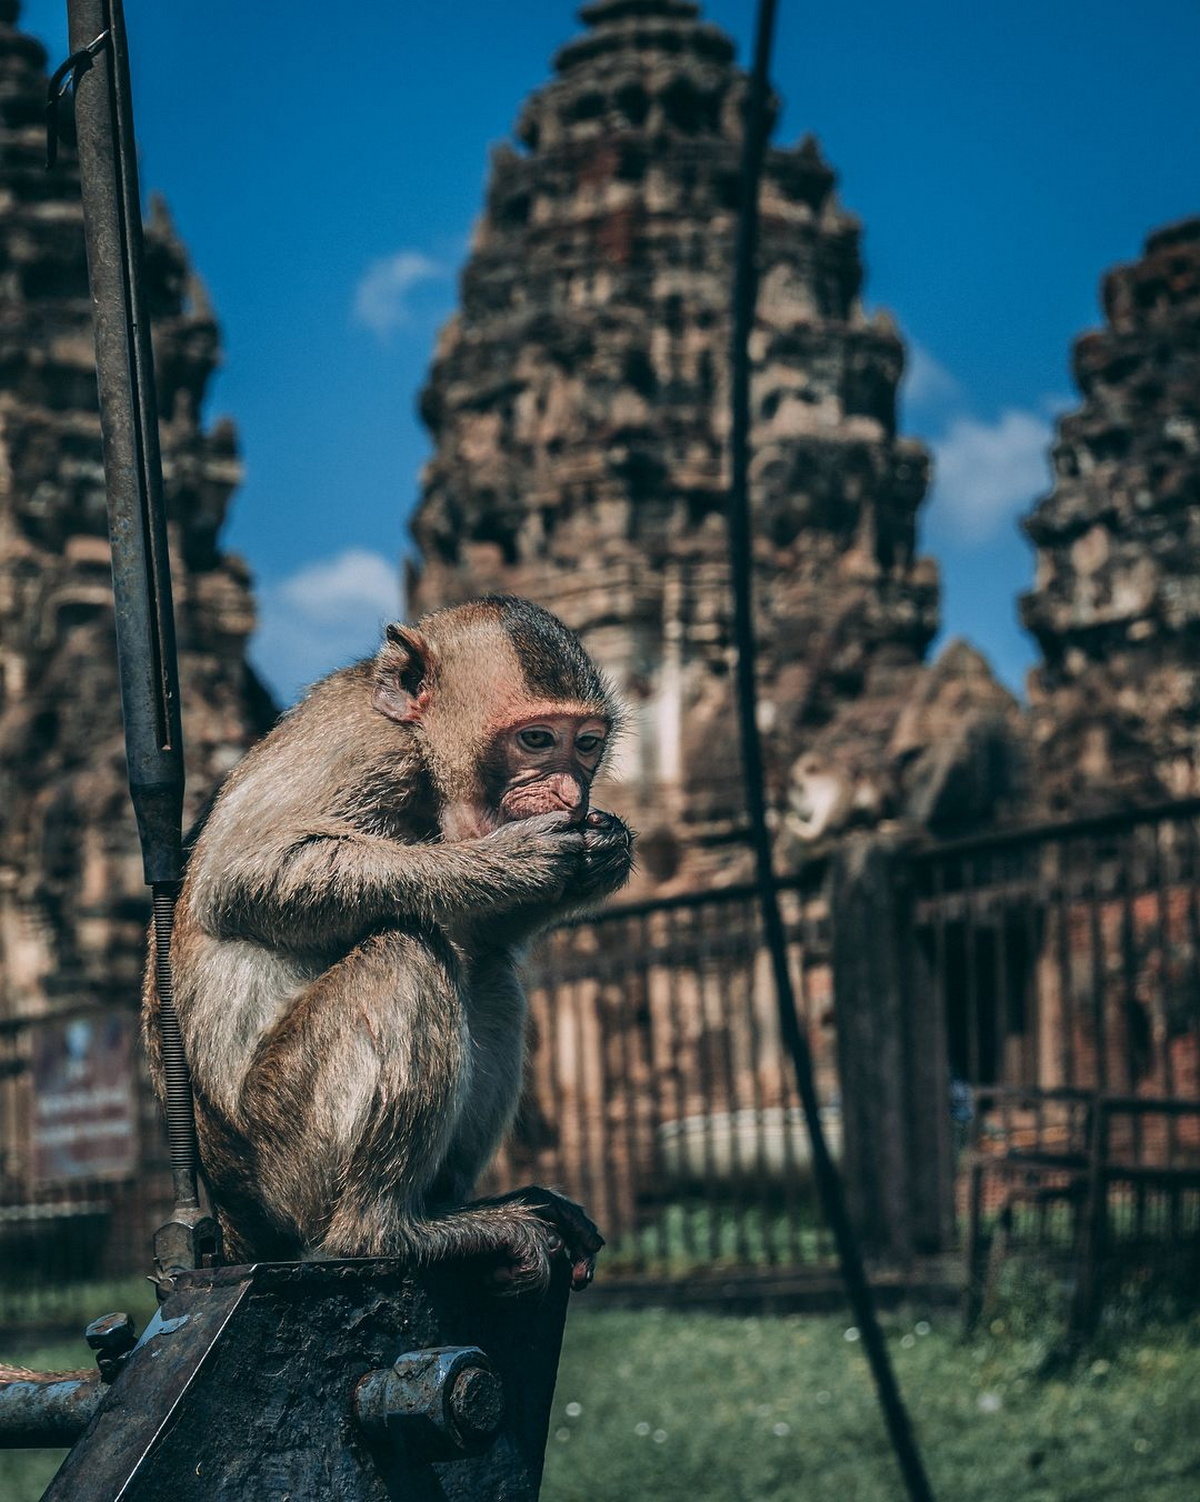 3500 обезьян захватили тайский город, заставляя людей бежать